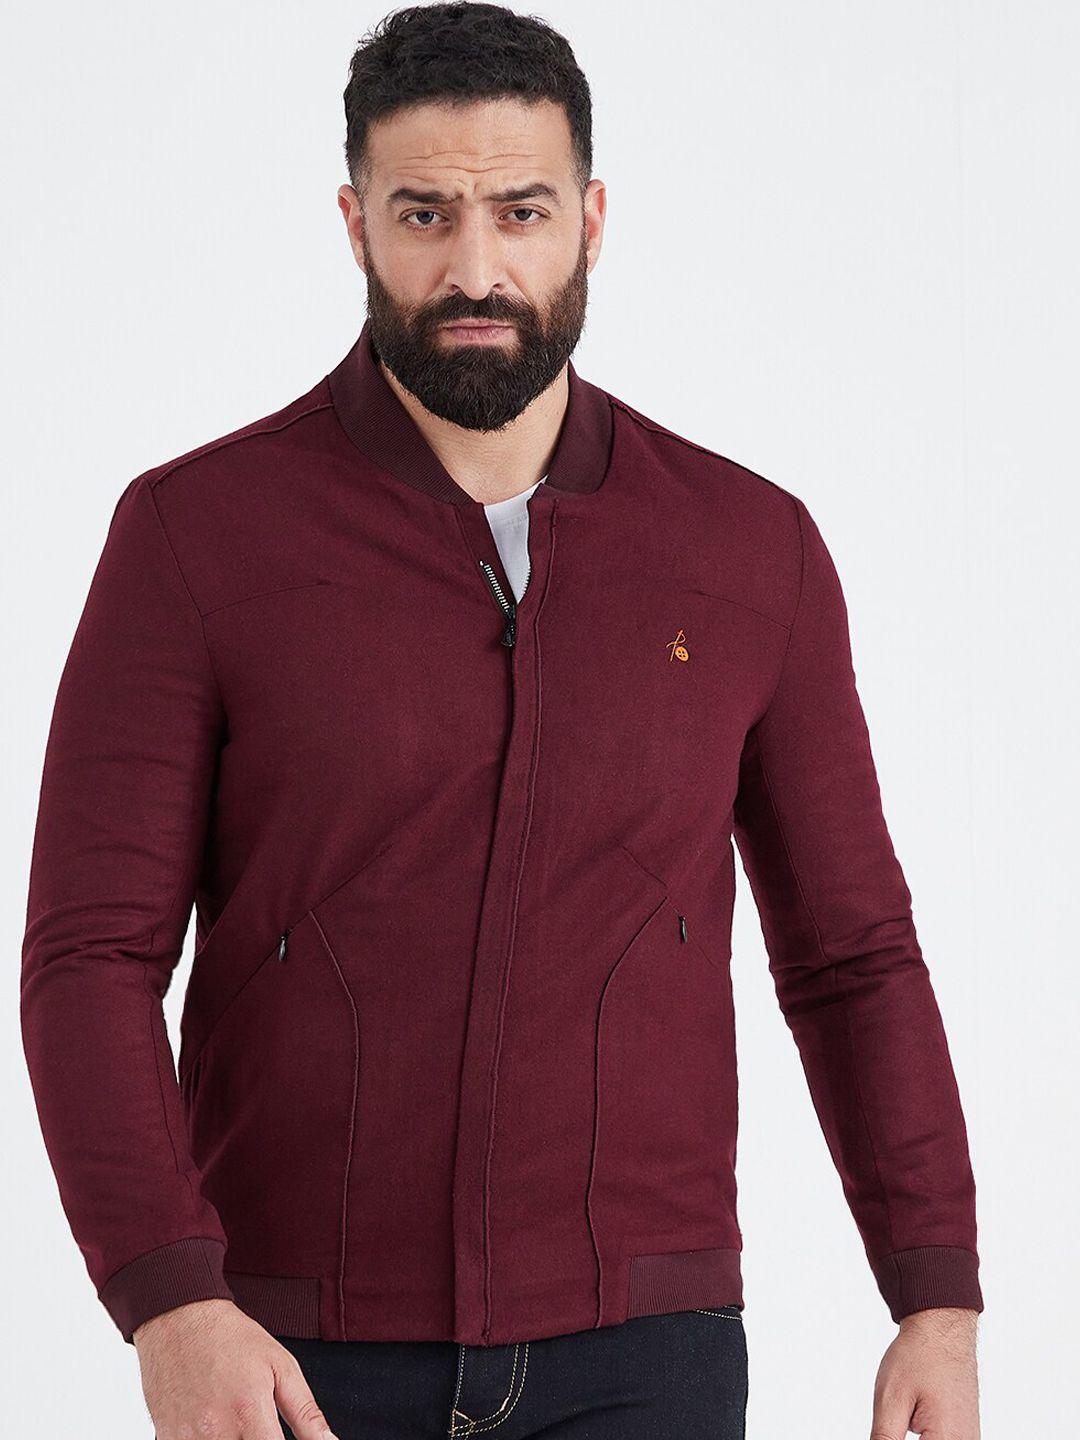 mr-button-men-burgundy-open-front-jacket